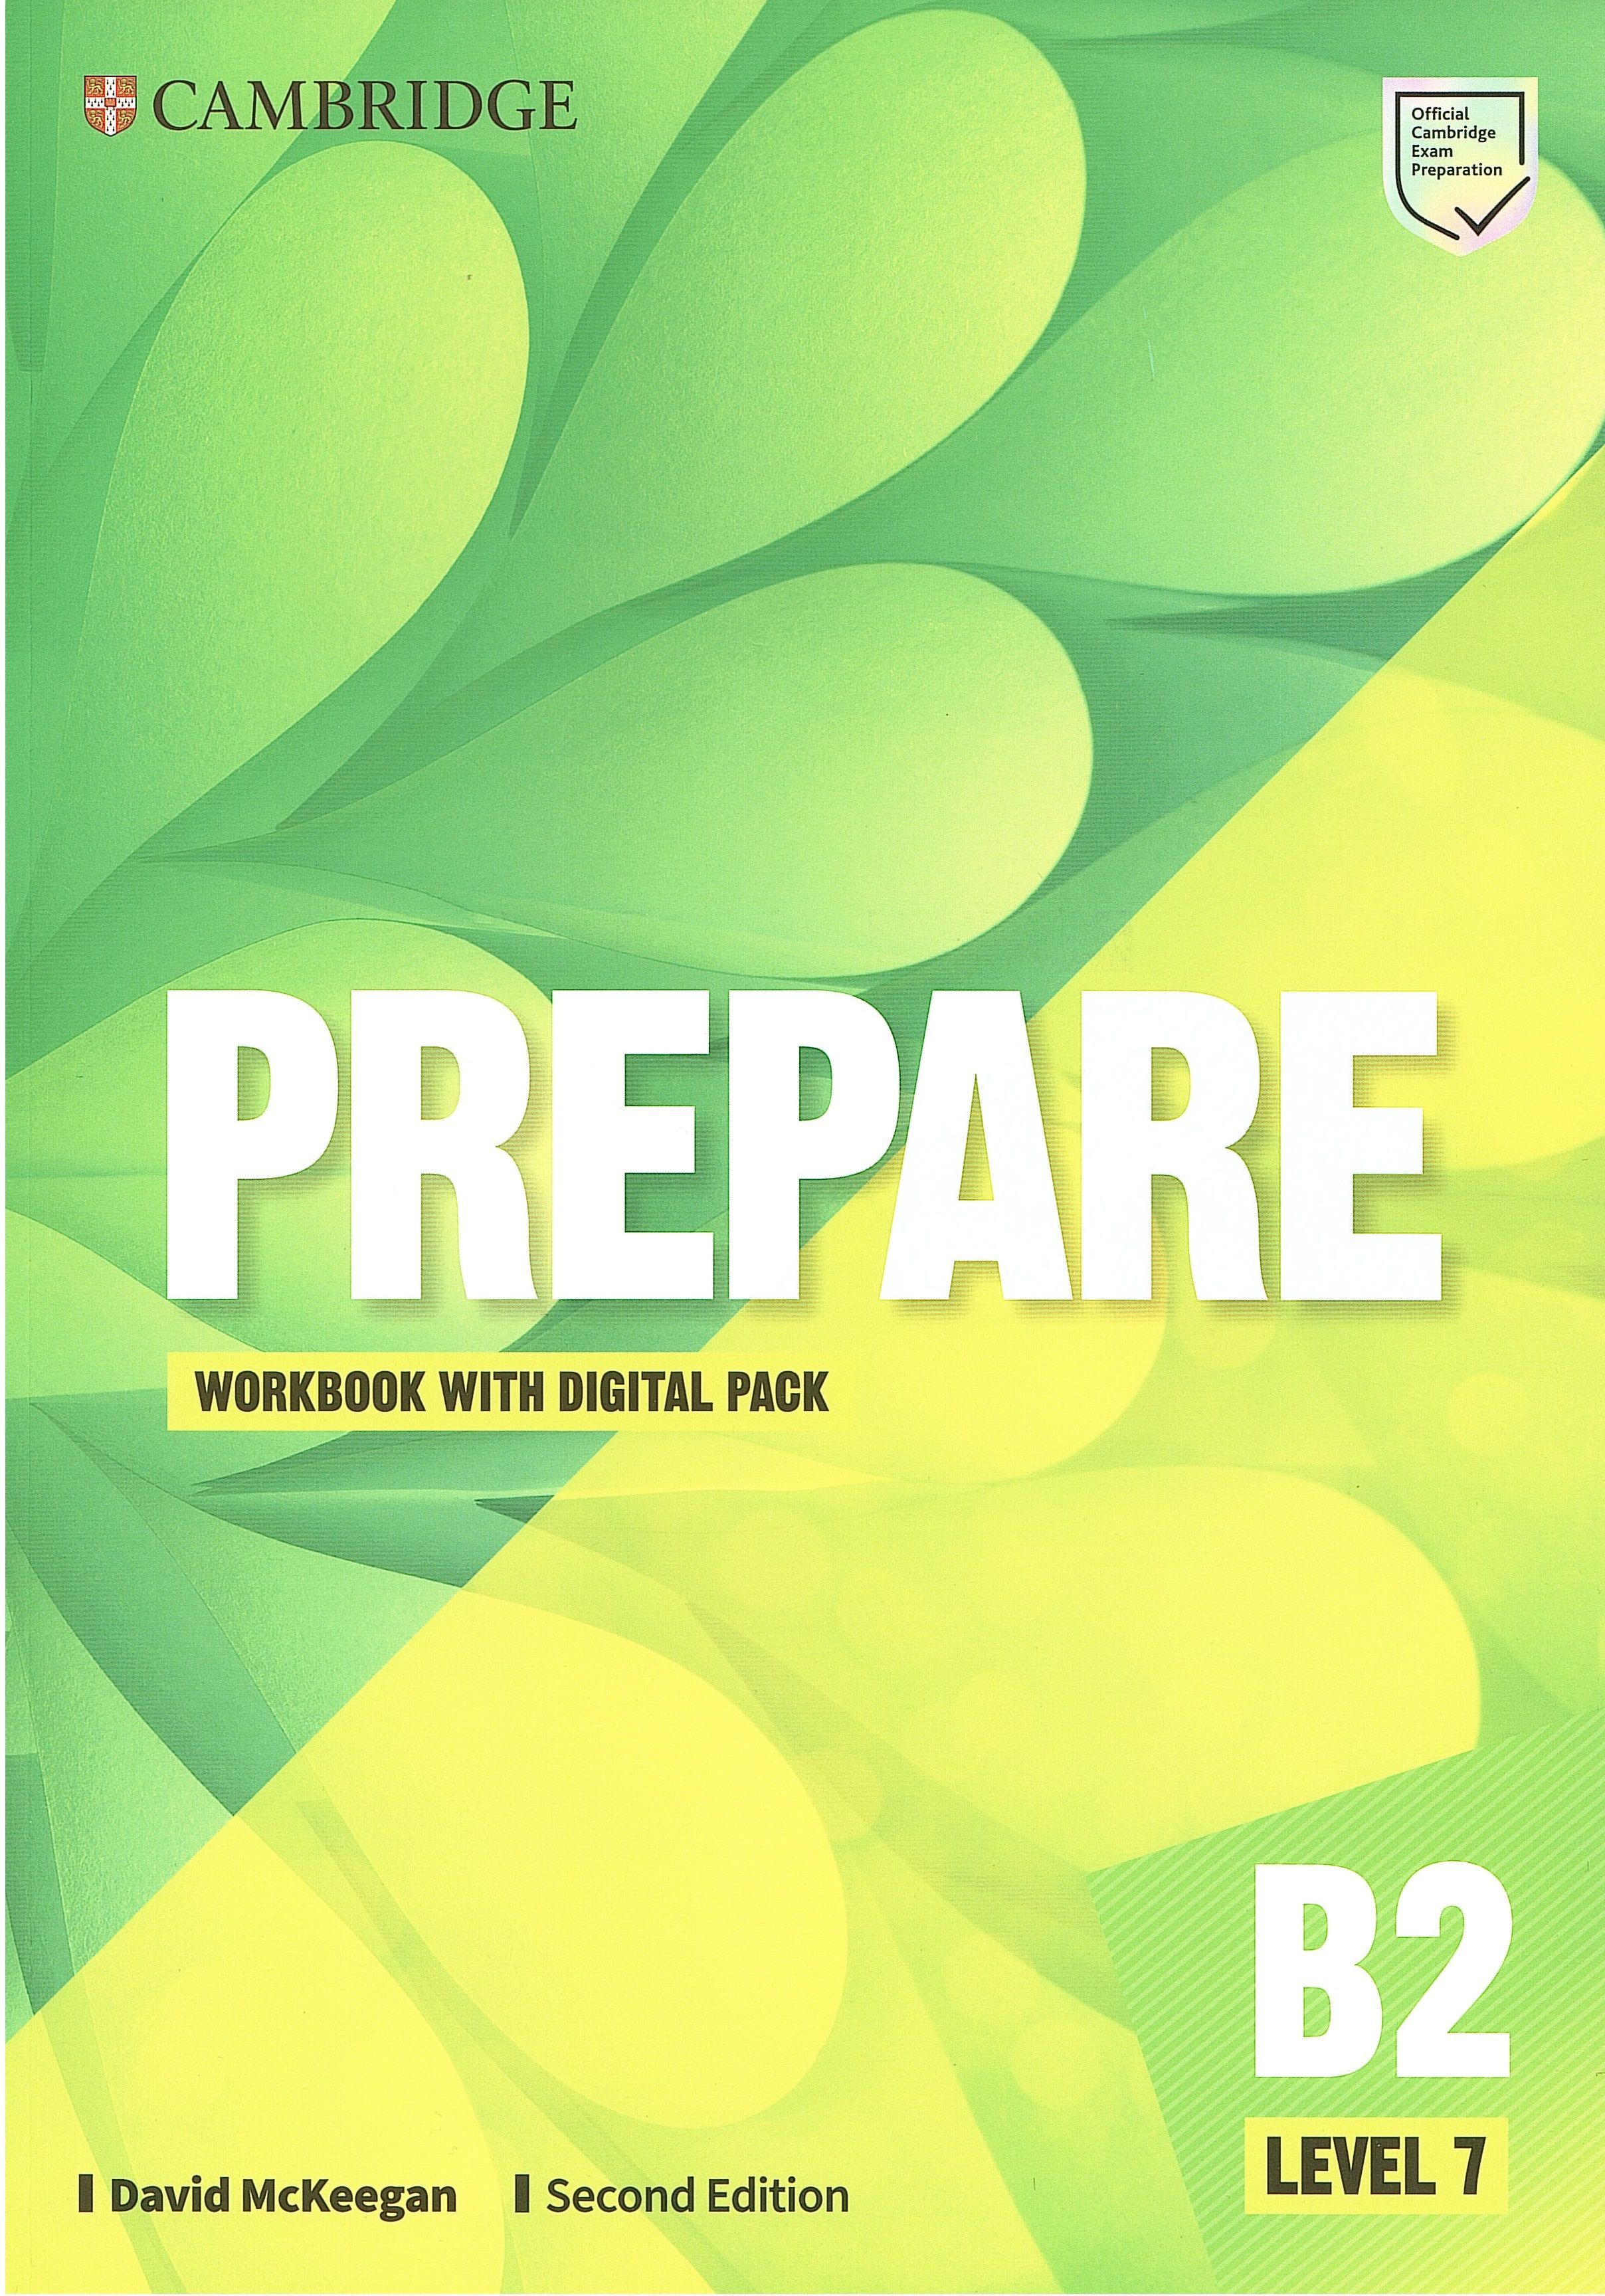 Prepare 2nd. Cambridge English Workbook Level 7 prepare second Edition. Prepare 7 2nd Edition. Prepare second Edition Level 7. Учебник prepare 7.